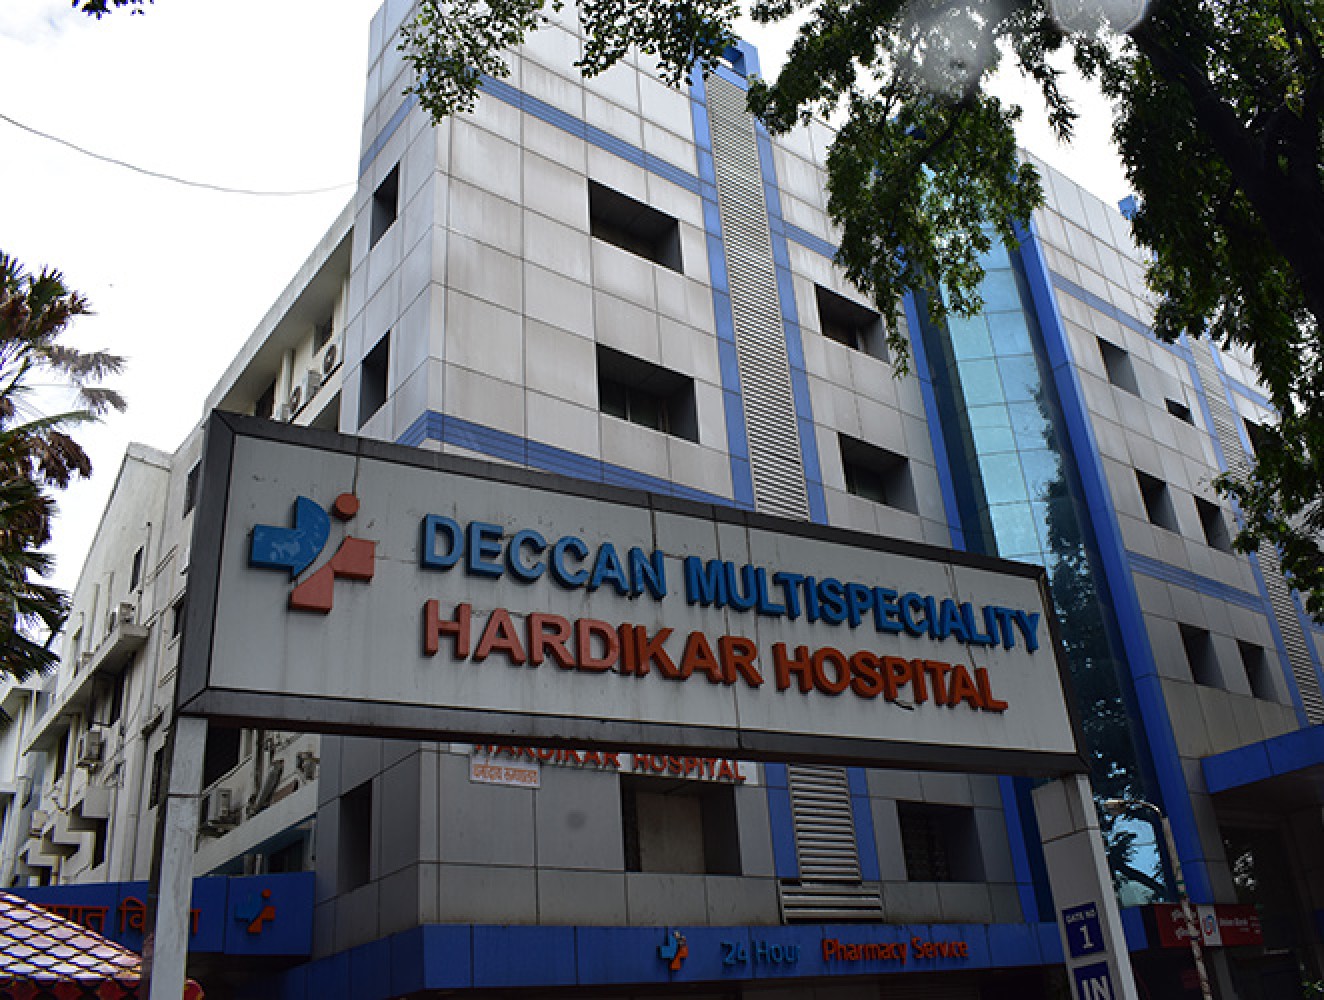 Deccan Hardikar Hospital - Sushrut Medical Care And Research Society photo